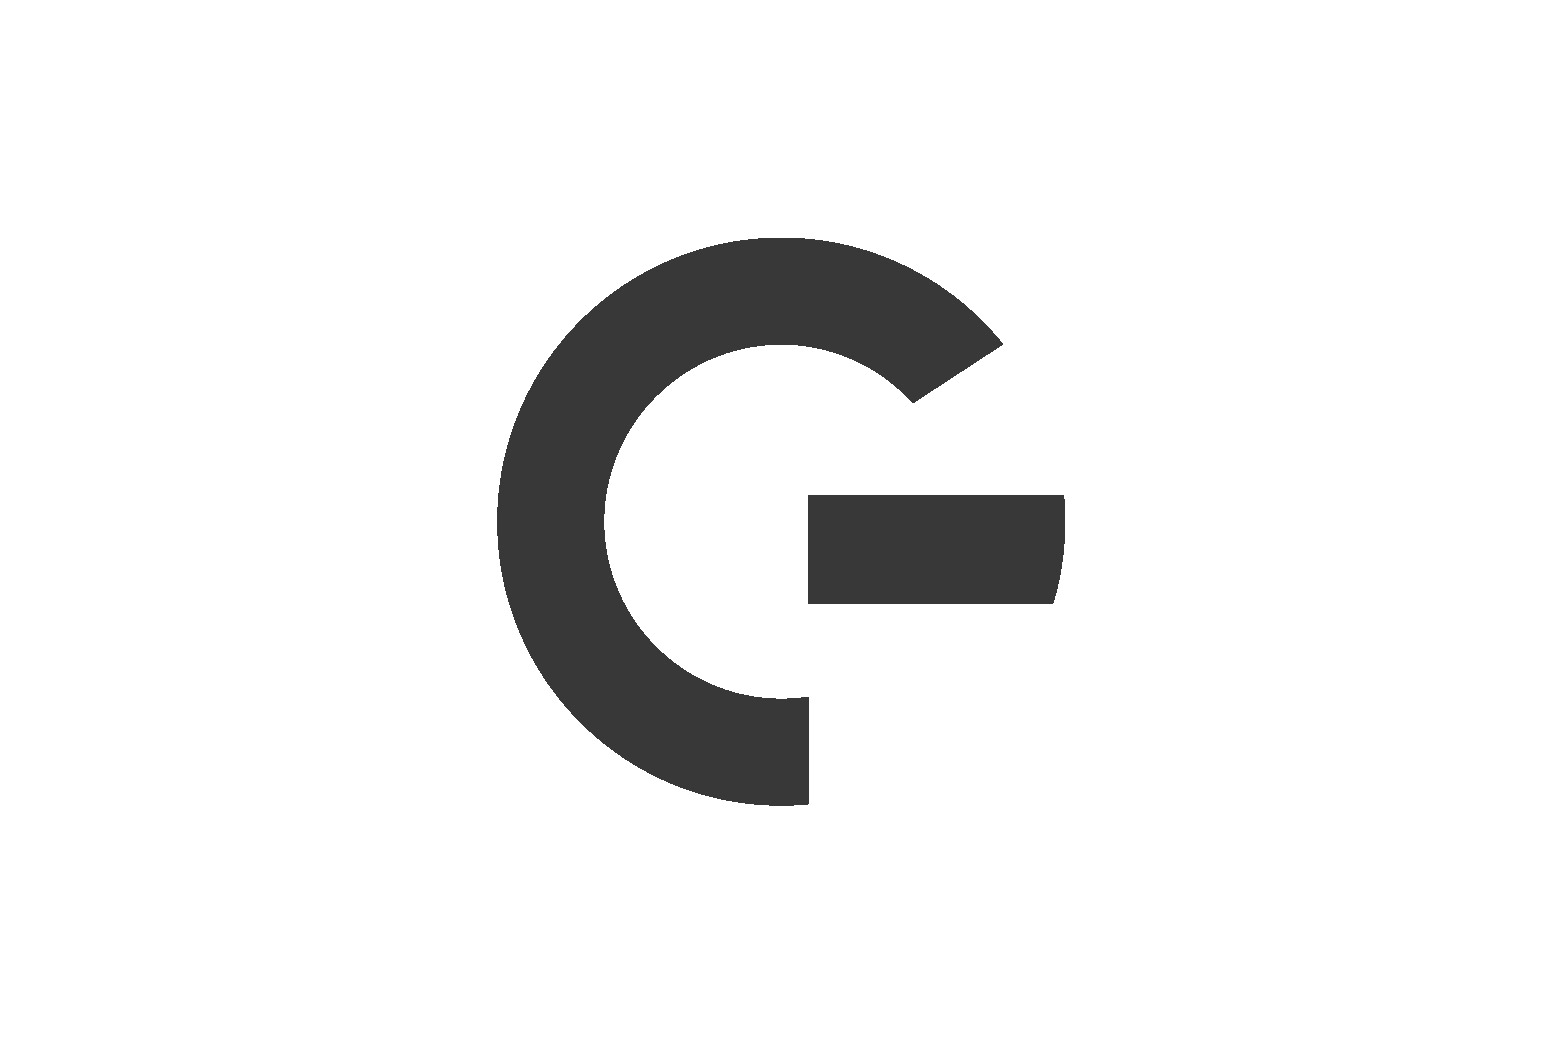 Download Letter G Monogram Simple Vector Icon Graphic By Vectoryzen Creative Fabrica